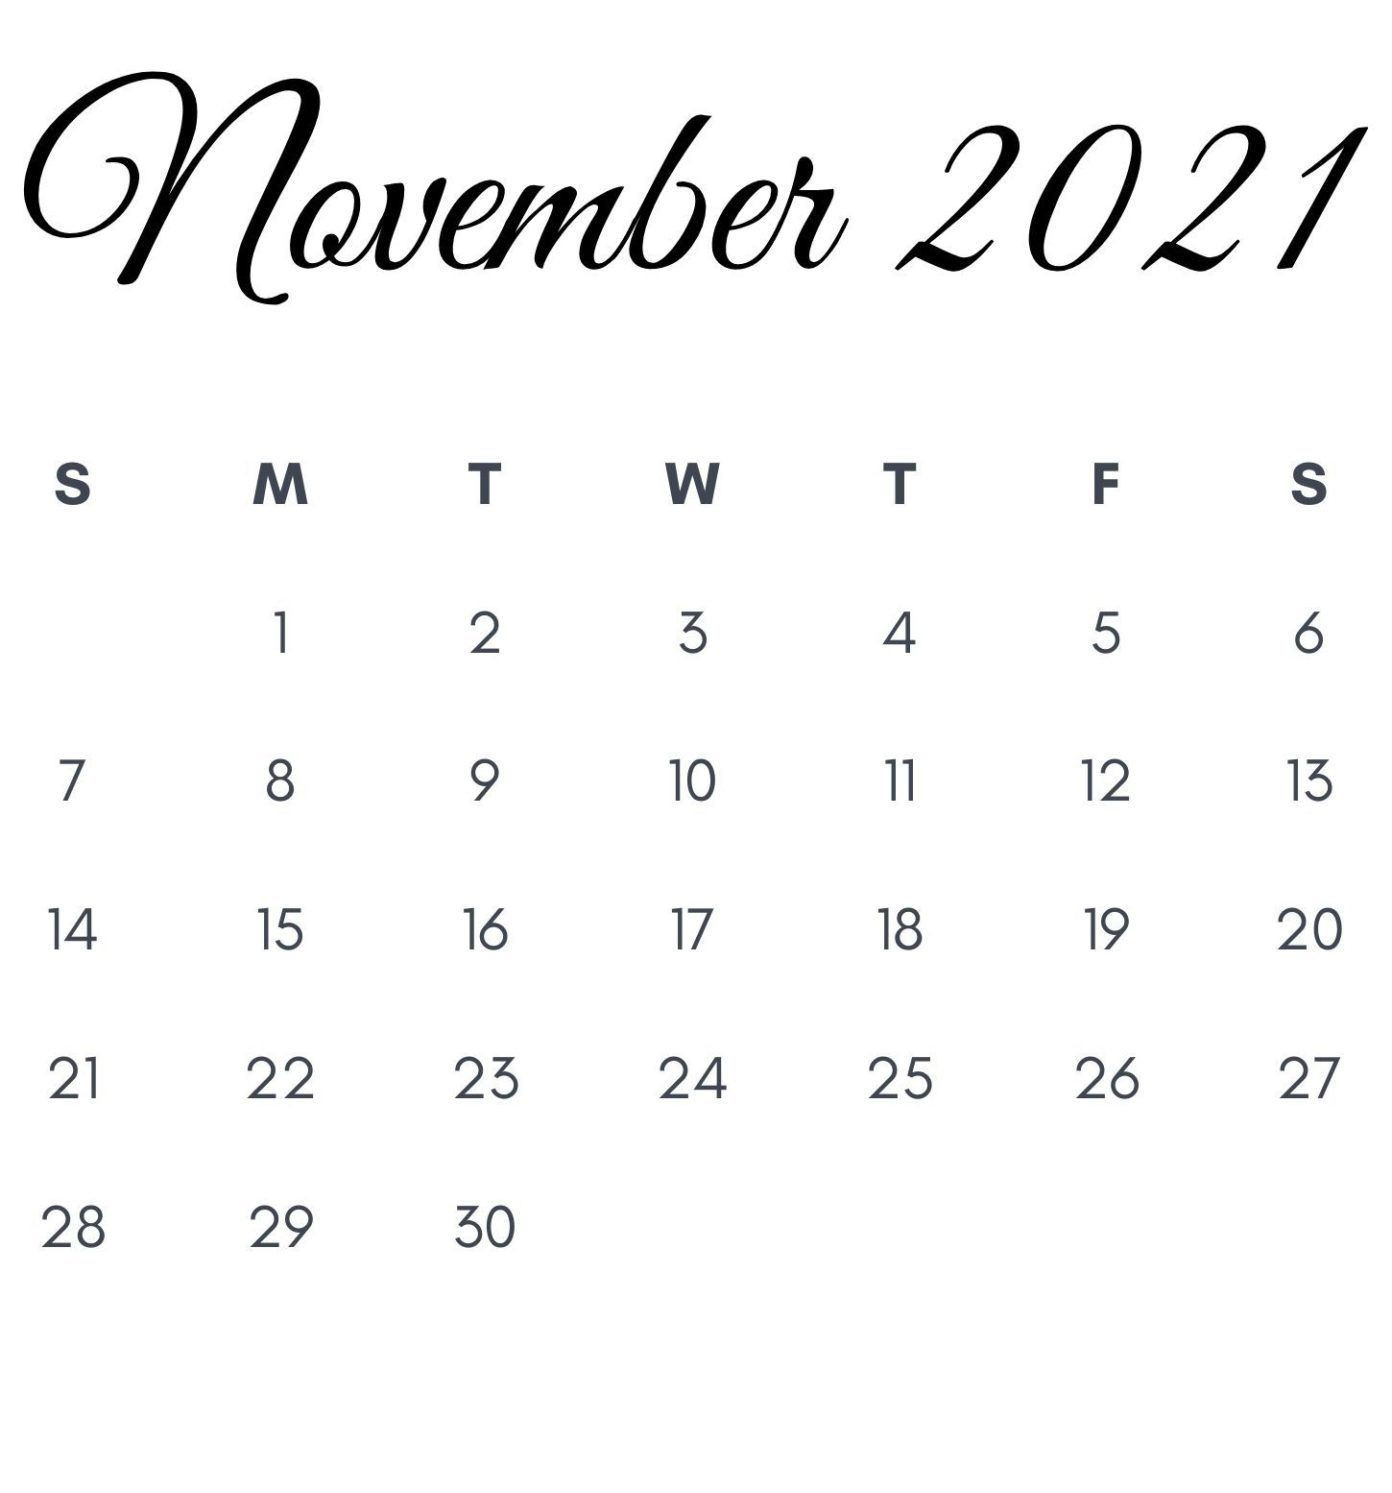 Monthly Calendar For November 2021 | Printable Calendar 2021-Hebrew And Calendars 2021-2021